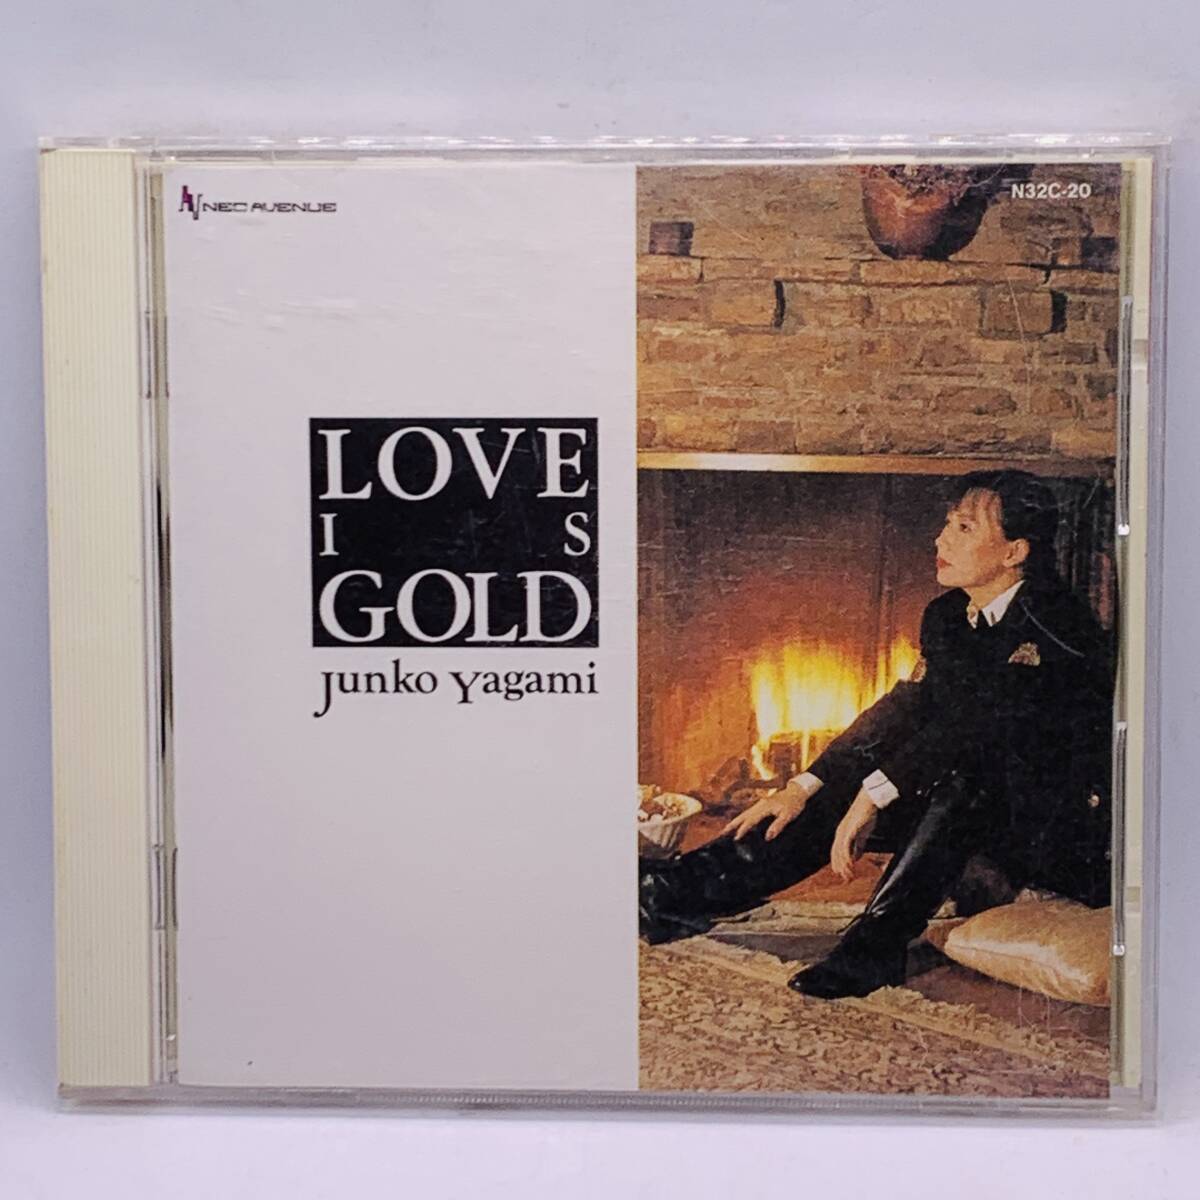 【CD】八神純子「LOVE IS GOLD」NECアベニュー N32C-20 アルバム 20240313G05_画像1